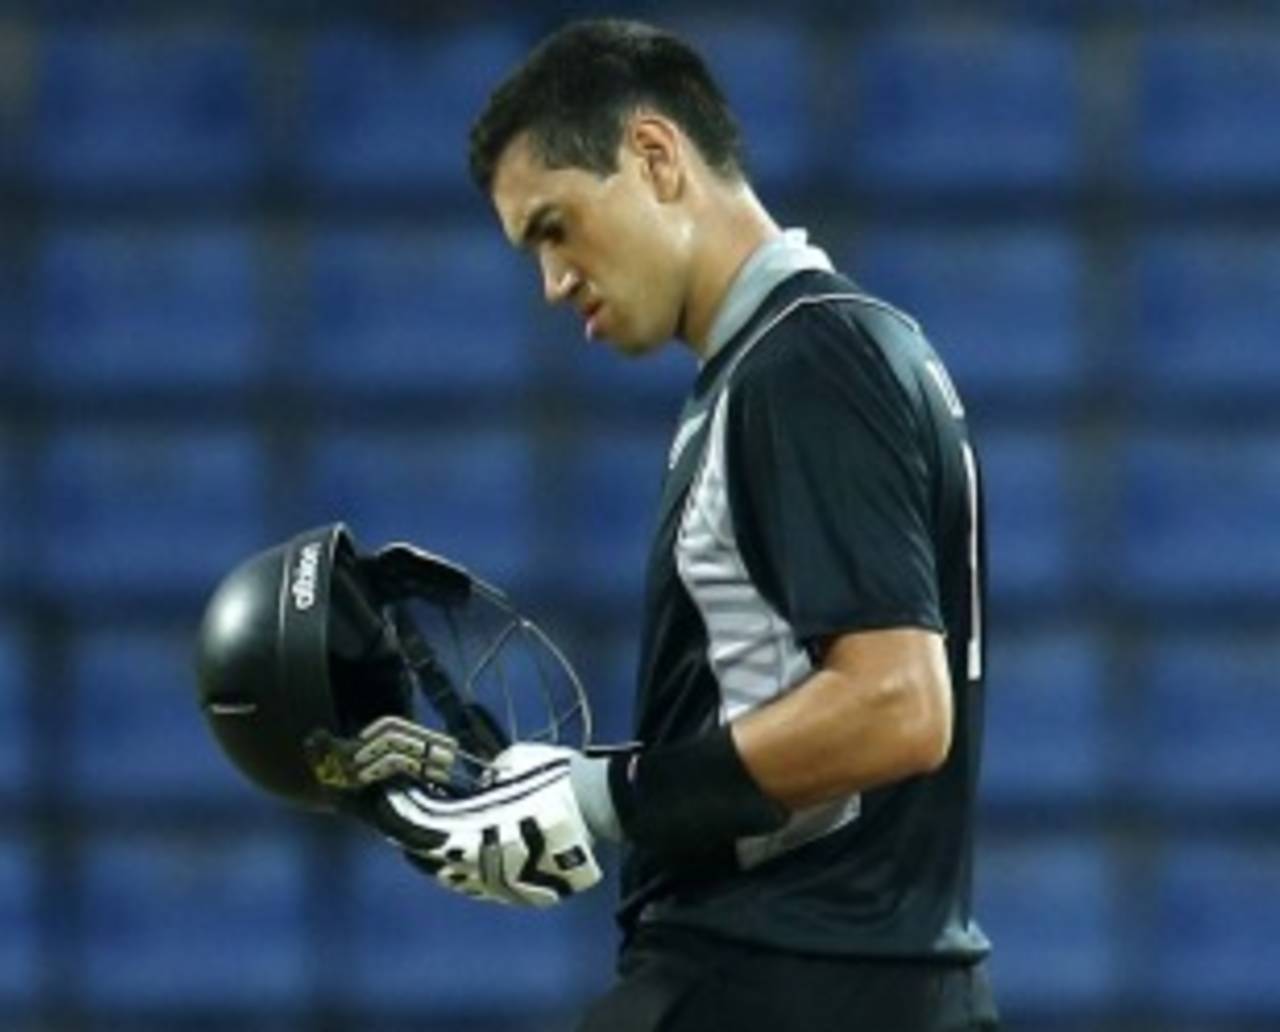 Ross Taylor checks his helmet after being hit by Lasith Malinga, Sri Lanka v New Zealand, 2nd ODI, Pallekele, November 4, 2012